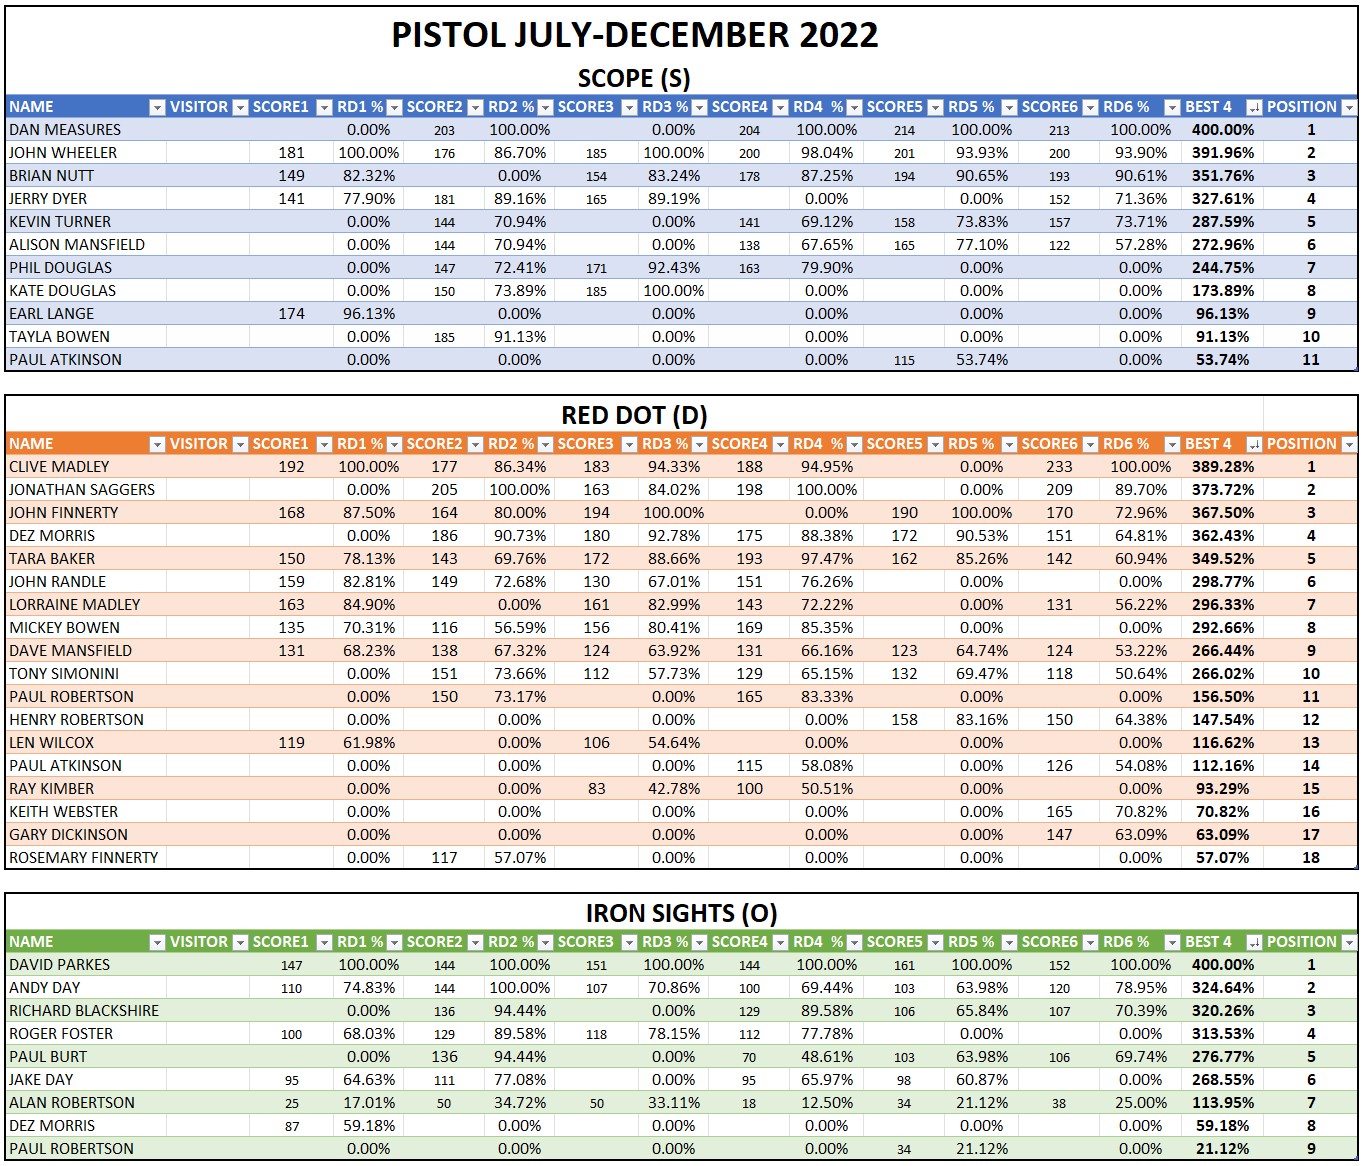 LVAGC Pistol League - July to December 2022